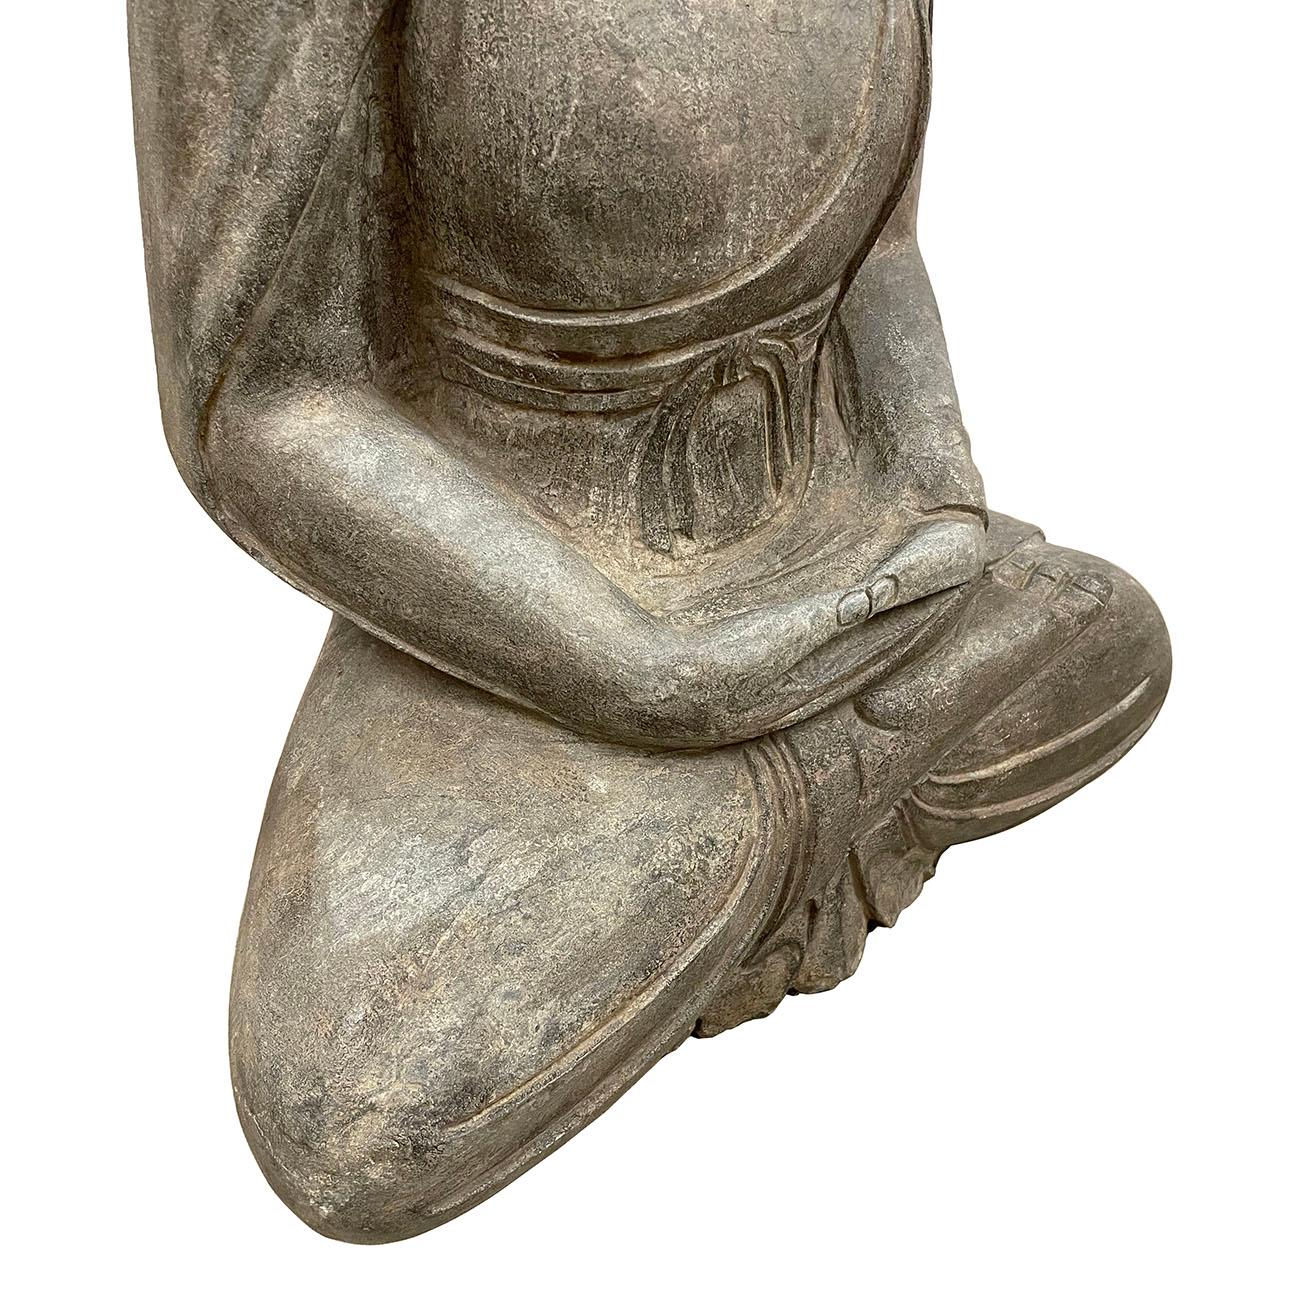 20th Century Chinese Carved Stone Meditation Amitabha Sakyamuni Buddha Statuary 5